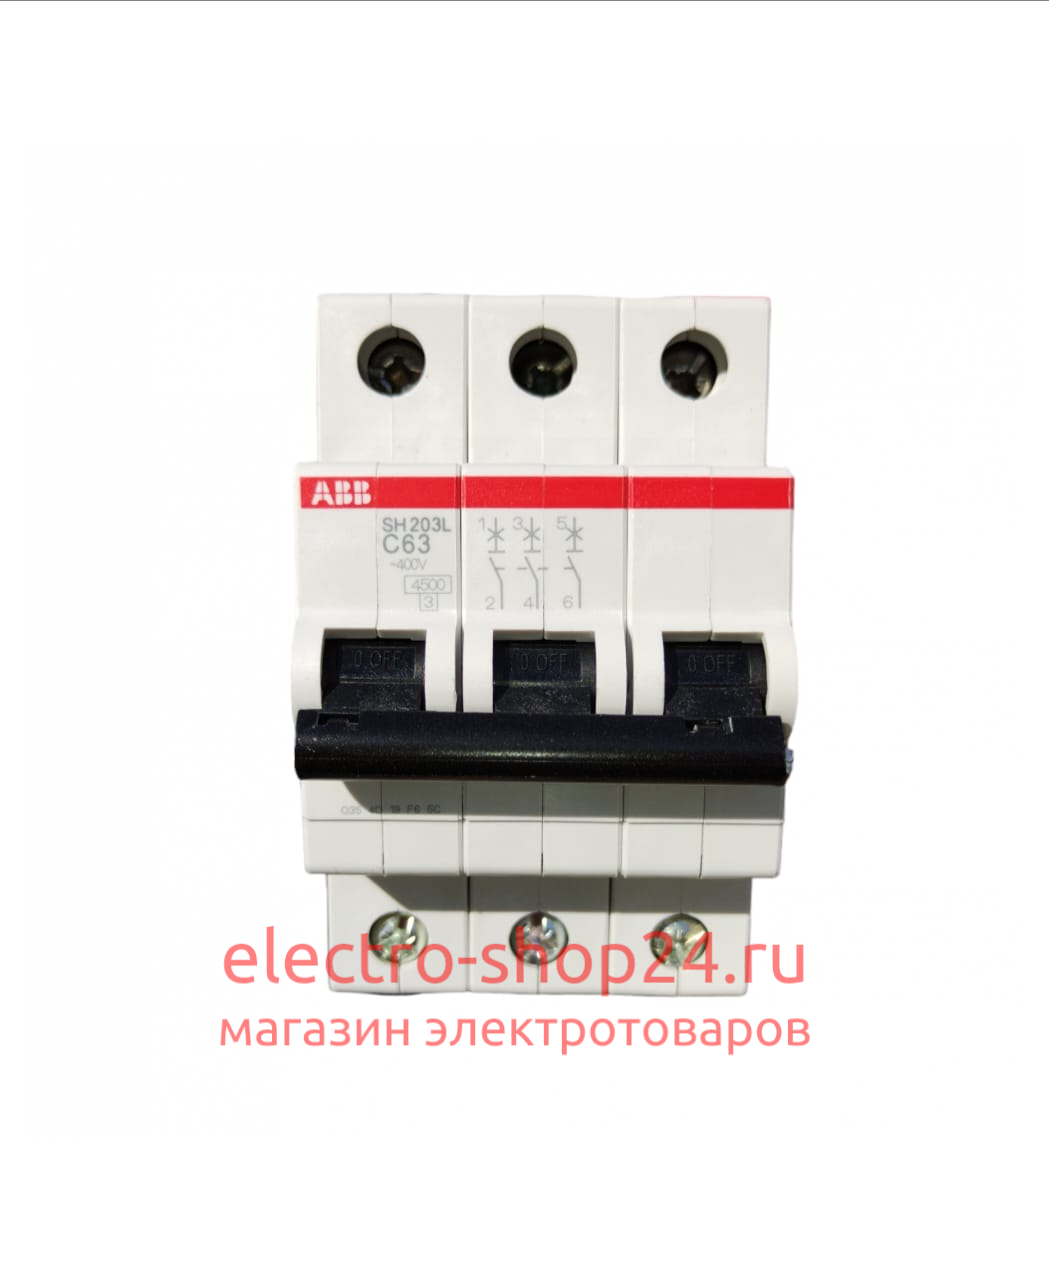 SH203L C63 Автоматический выключатель 3-полюсный 63А 4,5кА (хар-ка C) ABB 2CDS243001R0634 2CDS243001R0634 - магазин электротехники Electroshop